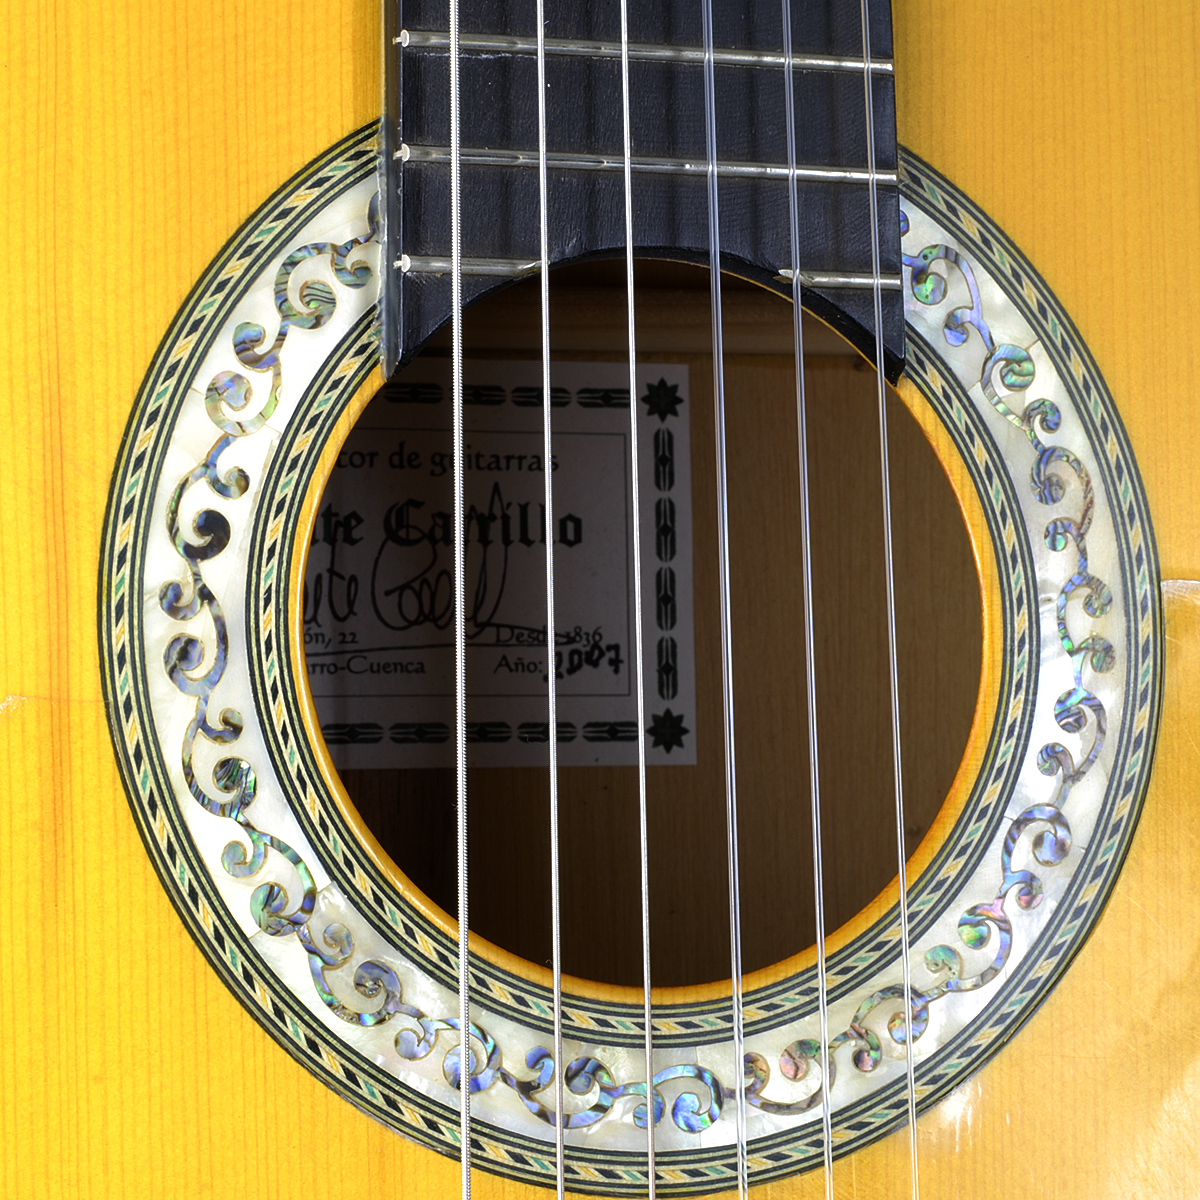 Vincente Carrillo flamenco guitar (2007)